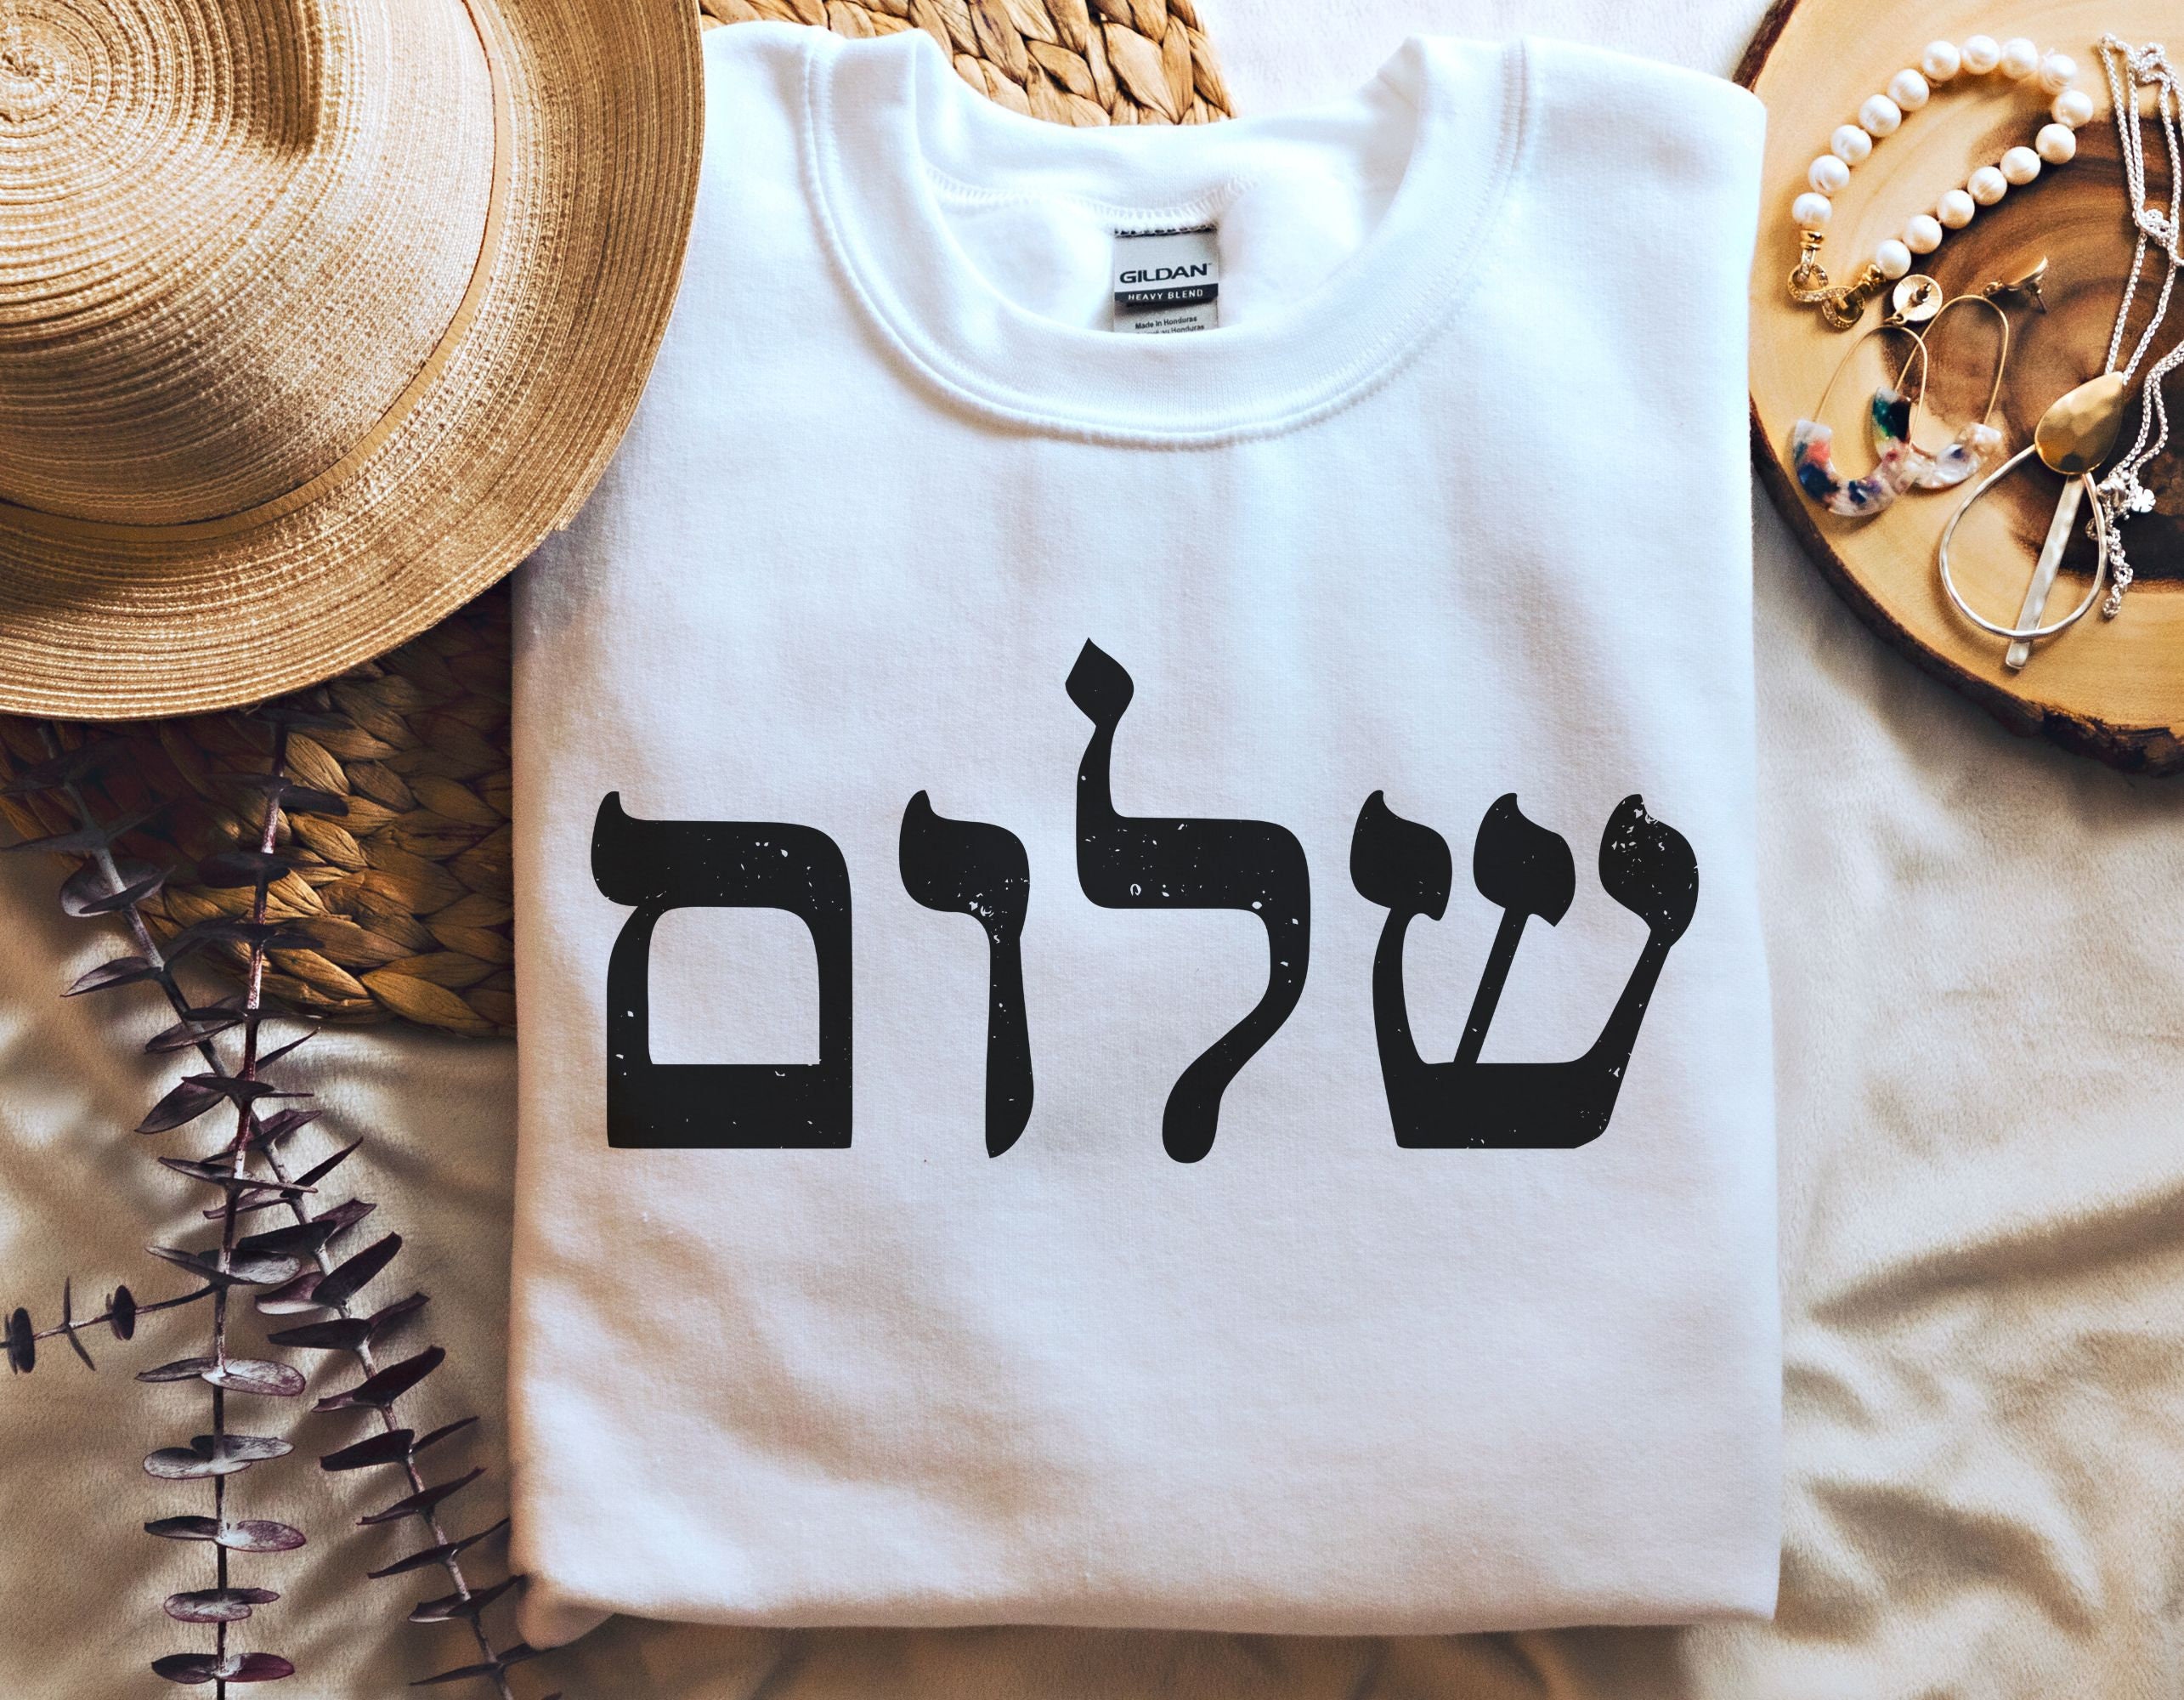 Paleo Shalom Israel Sweater